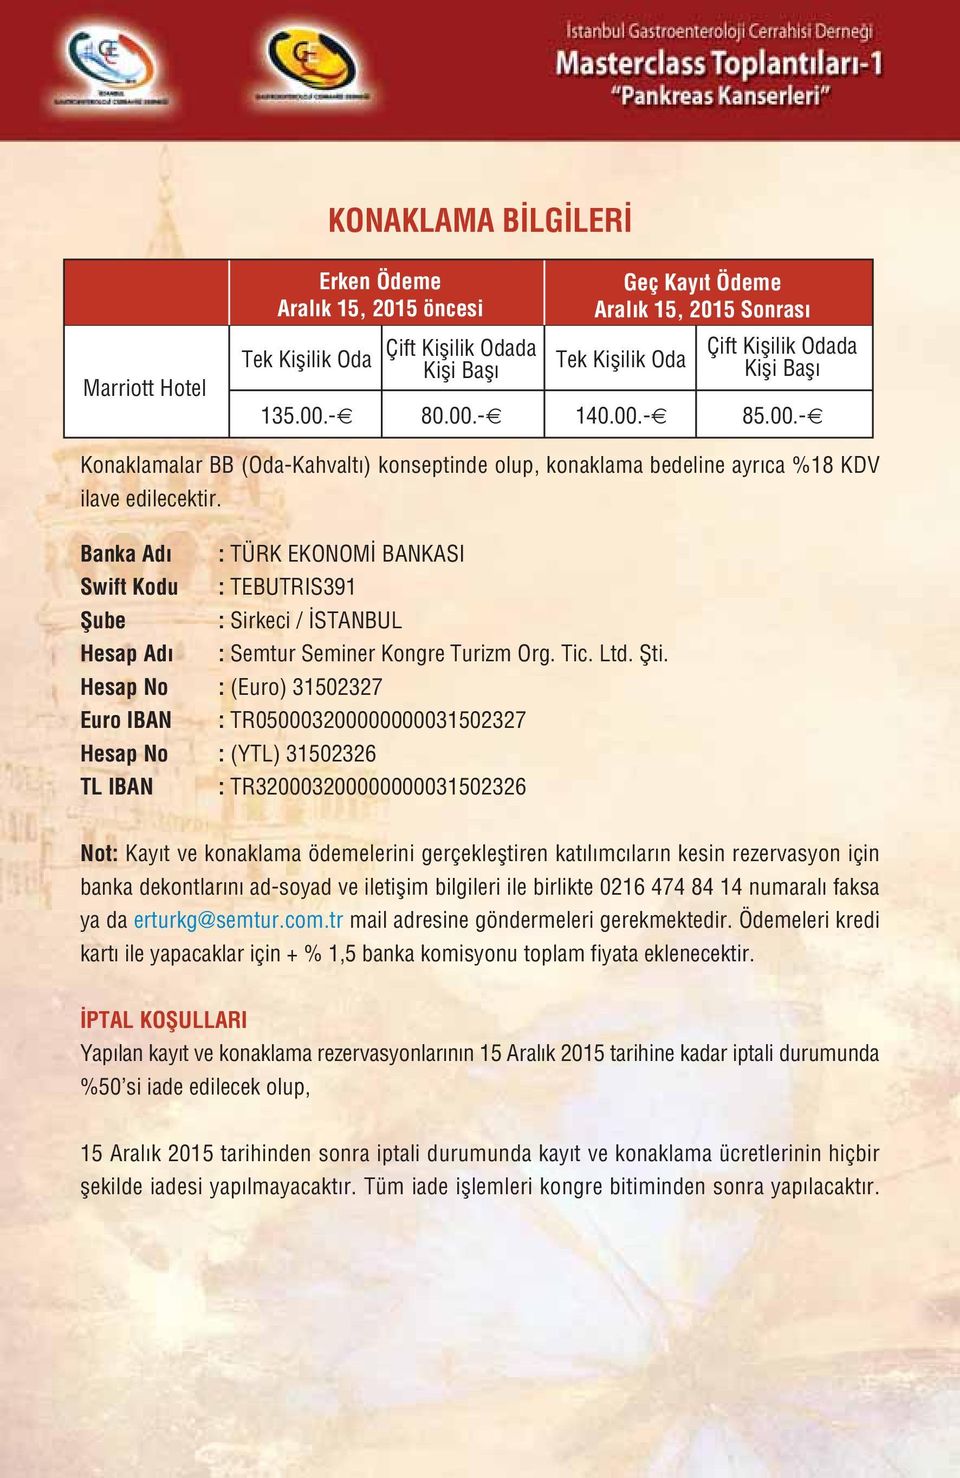 Banka Ad : TÜRK EKONOM BANKASI Swift Kodu : TEBUTRIS391 fiube : Sirkeci / STANBUL Hesap Ad : Semtur Seminer Kongre Turizm Org. Tic. Ltd. fiti.